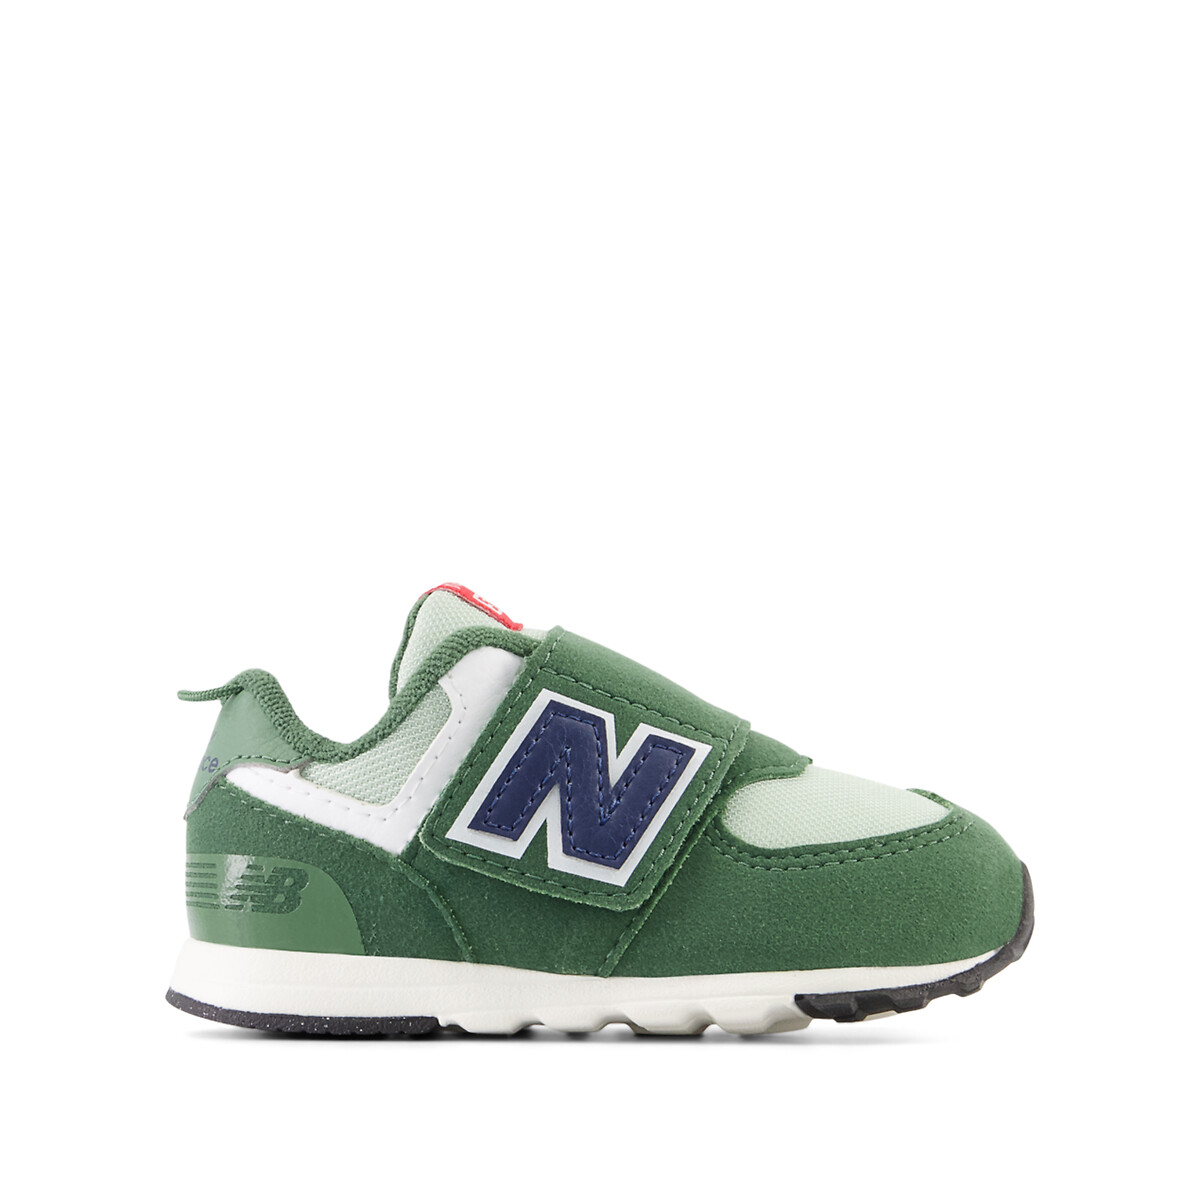 Sneakers NW574 von New Balance